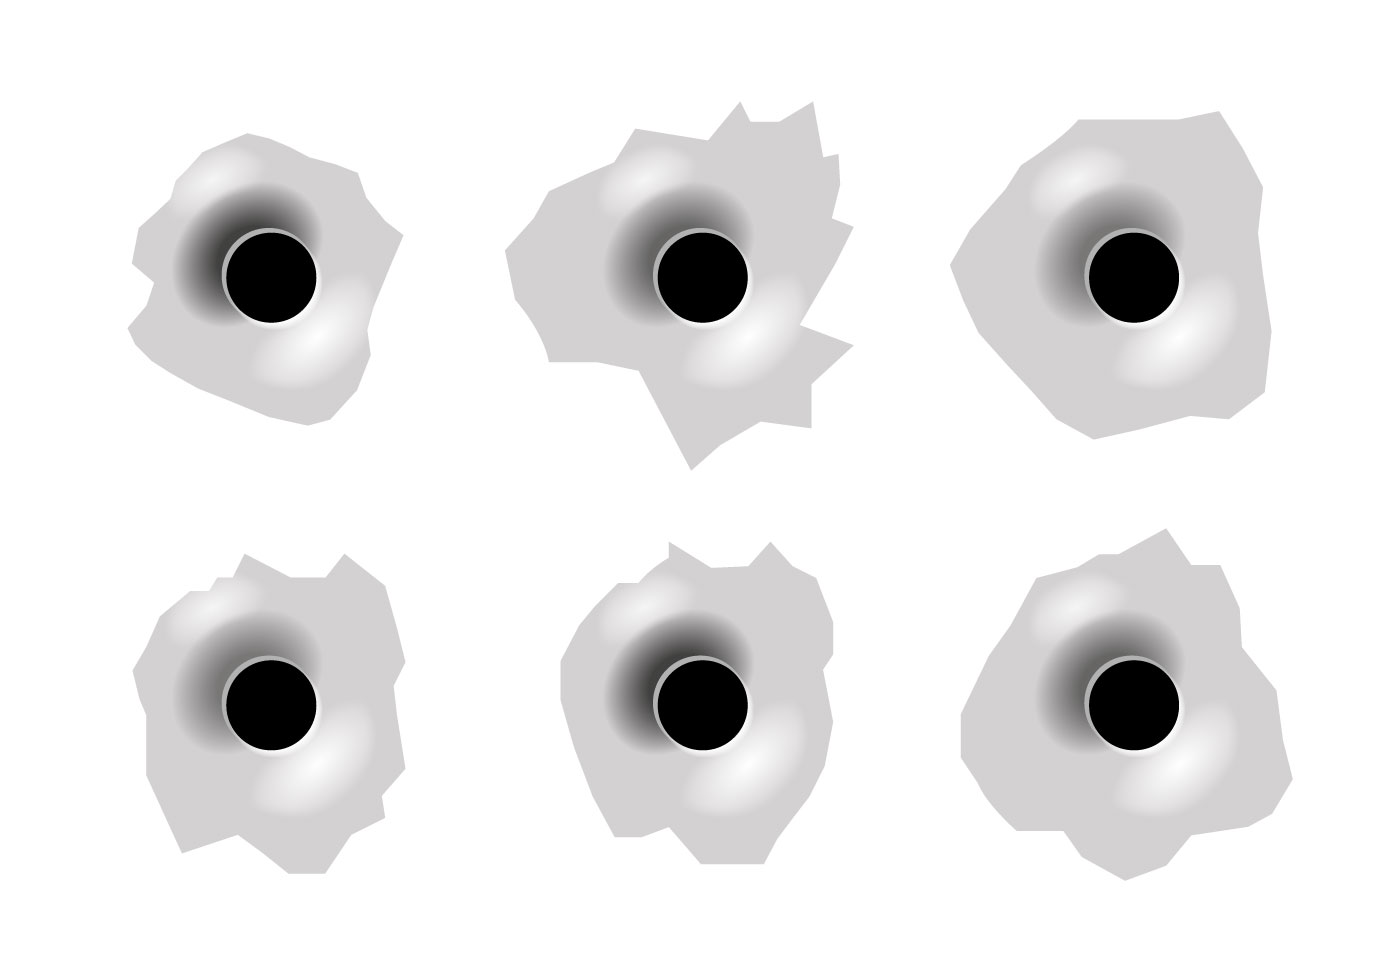 Free Bullet Holes Vector - Download Free Vector Art, Stock Graphics